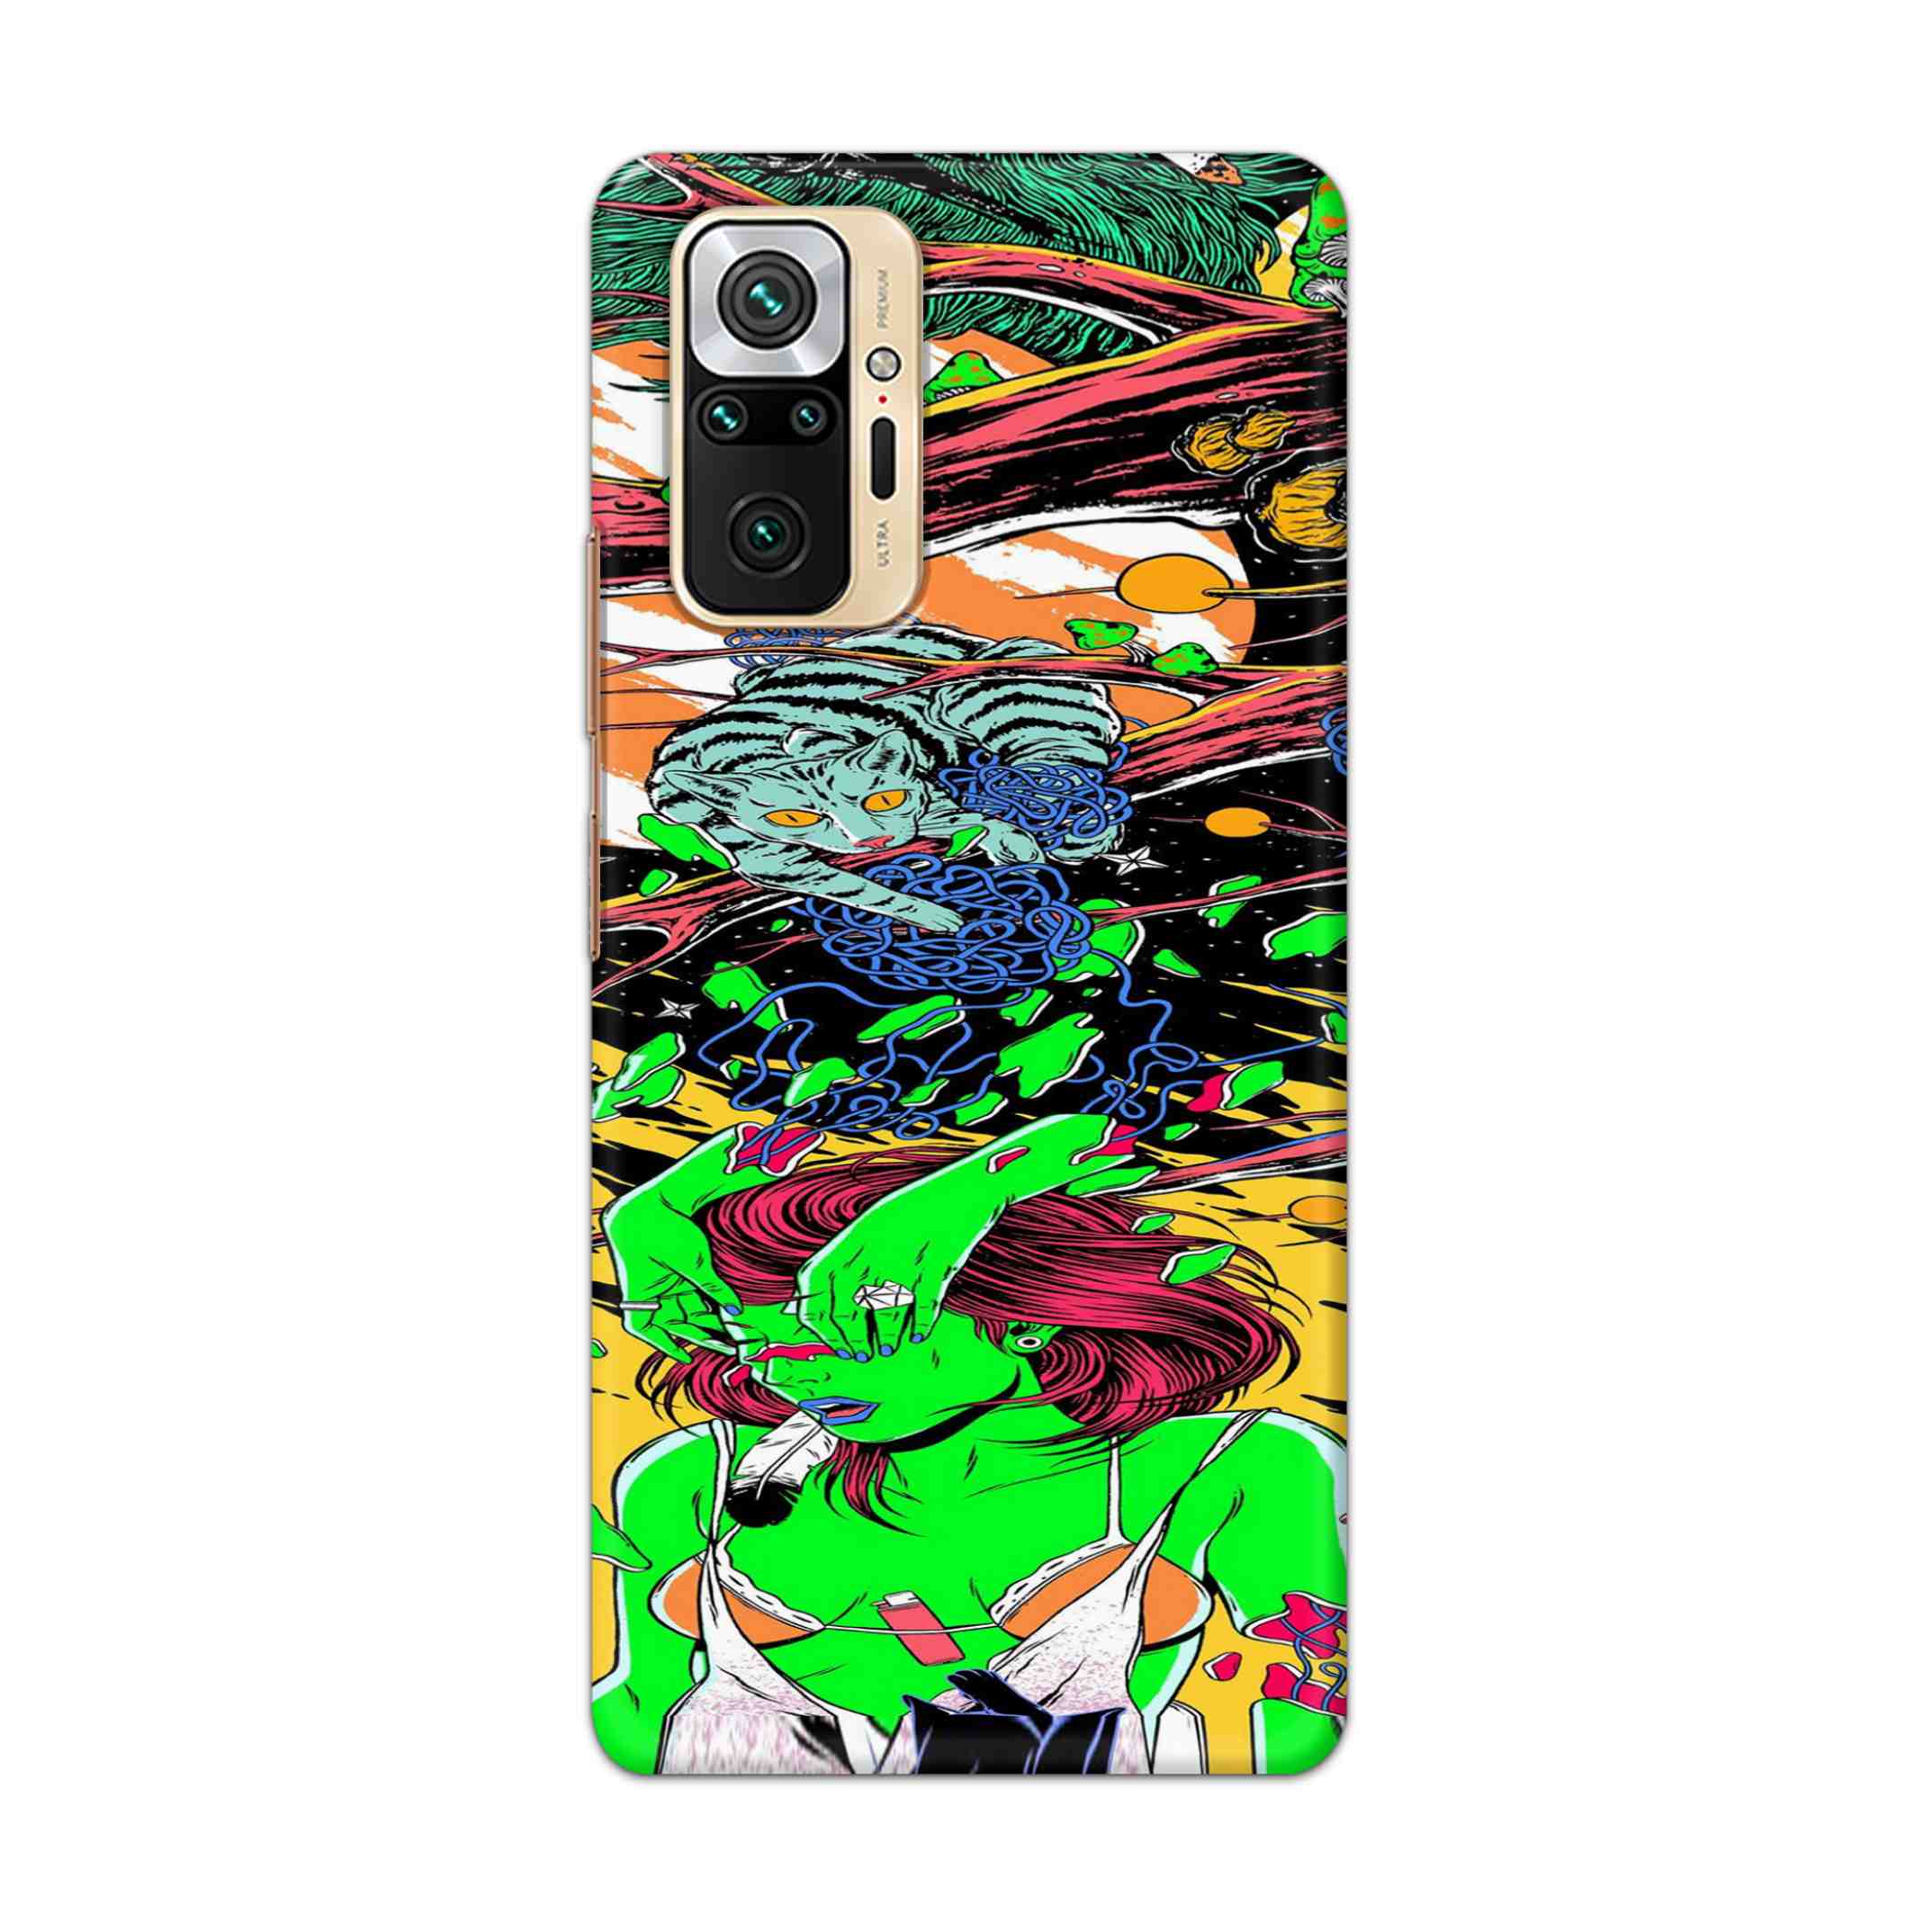 Buy Green Girl Art Hard Back Mobile Phone Case Cover For Redmi Note 10 Pro Online